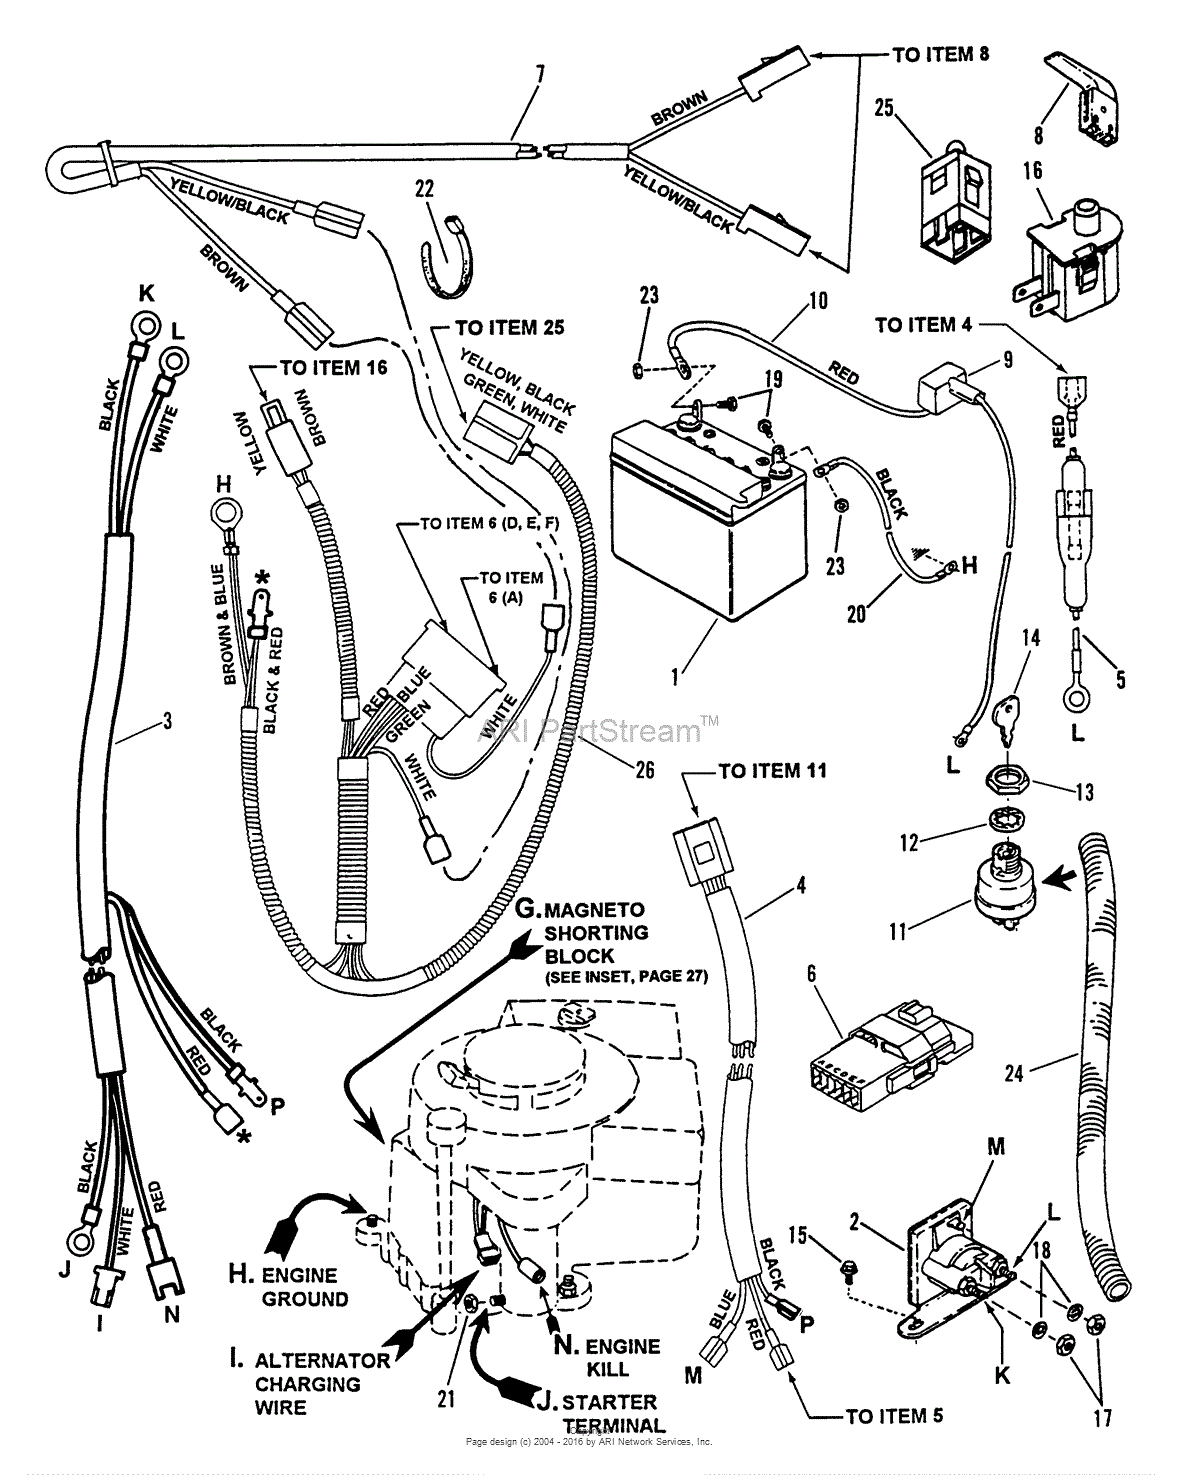 Tecumseh Magneto Wiring Diagram from az417944.vo.msecnd.net